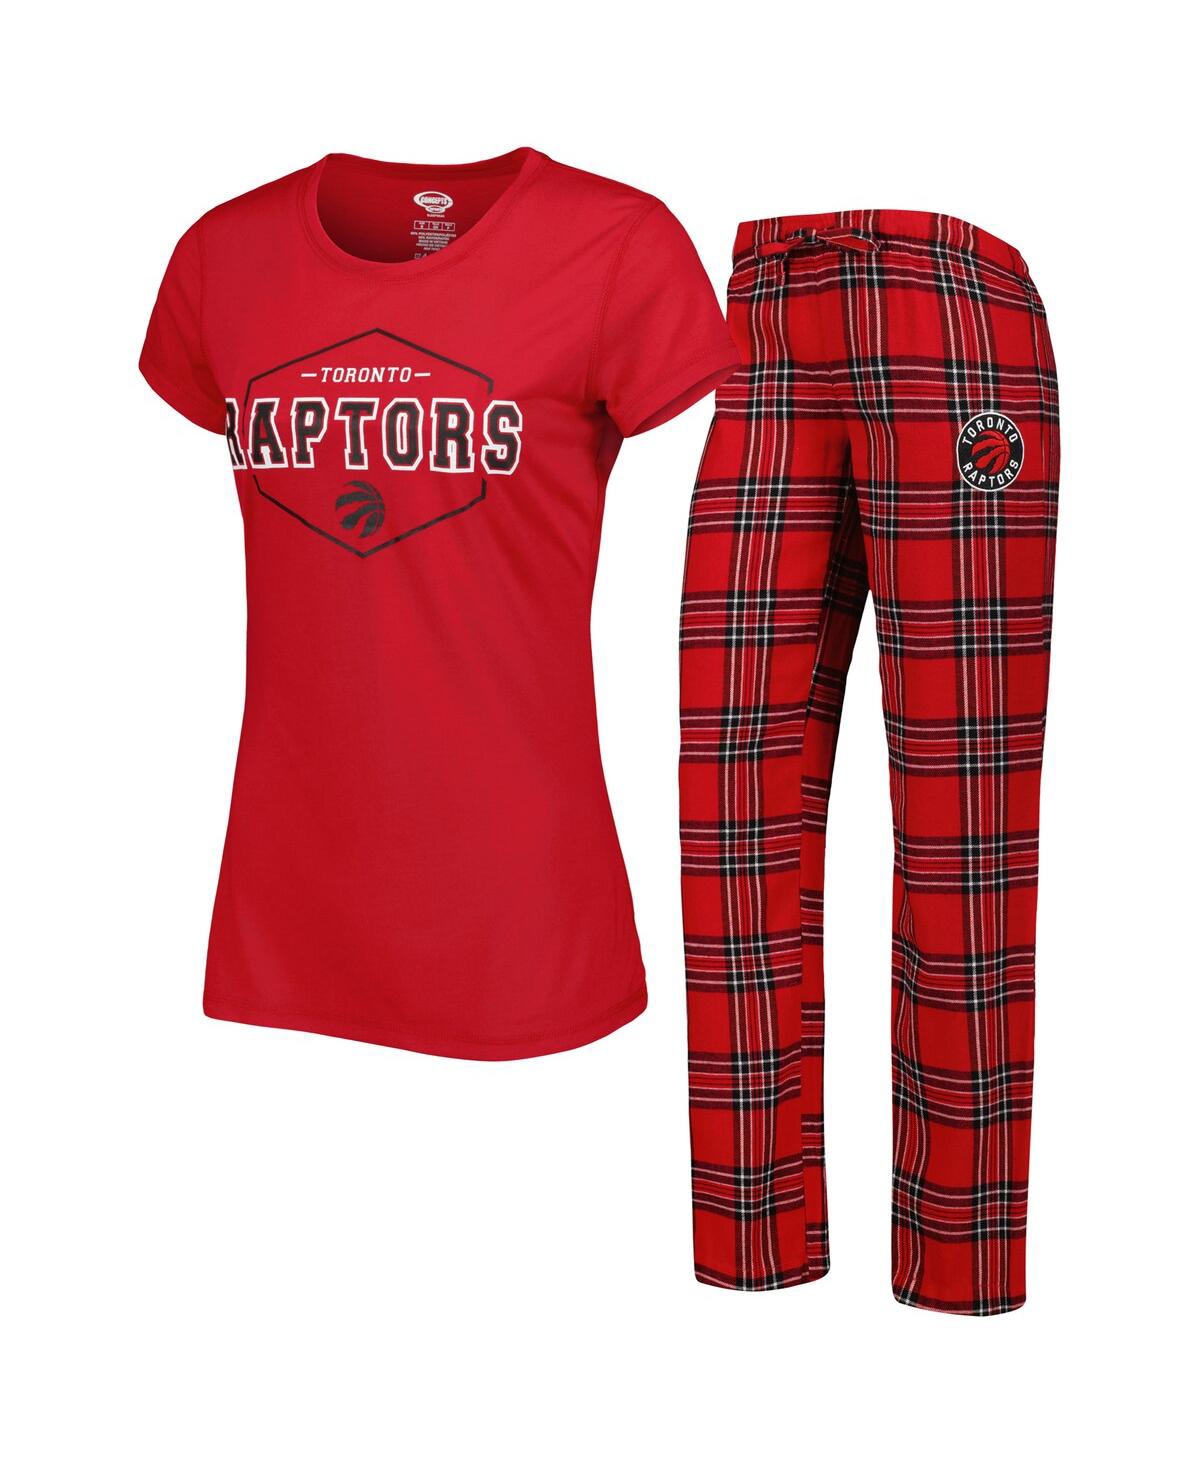 Women's Concepts Sport Red, Black Toronto Raptors Badge T-shirt and Pajama Pants Sleep Set - Red, Black